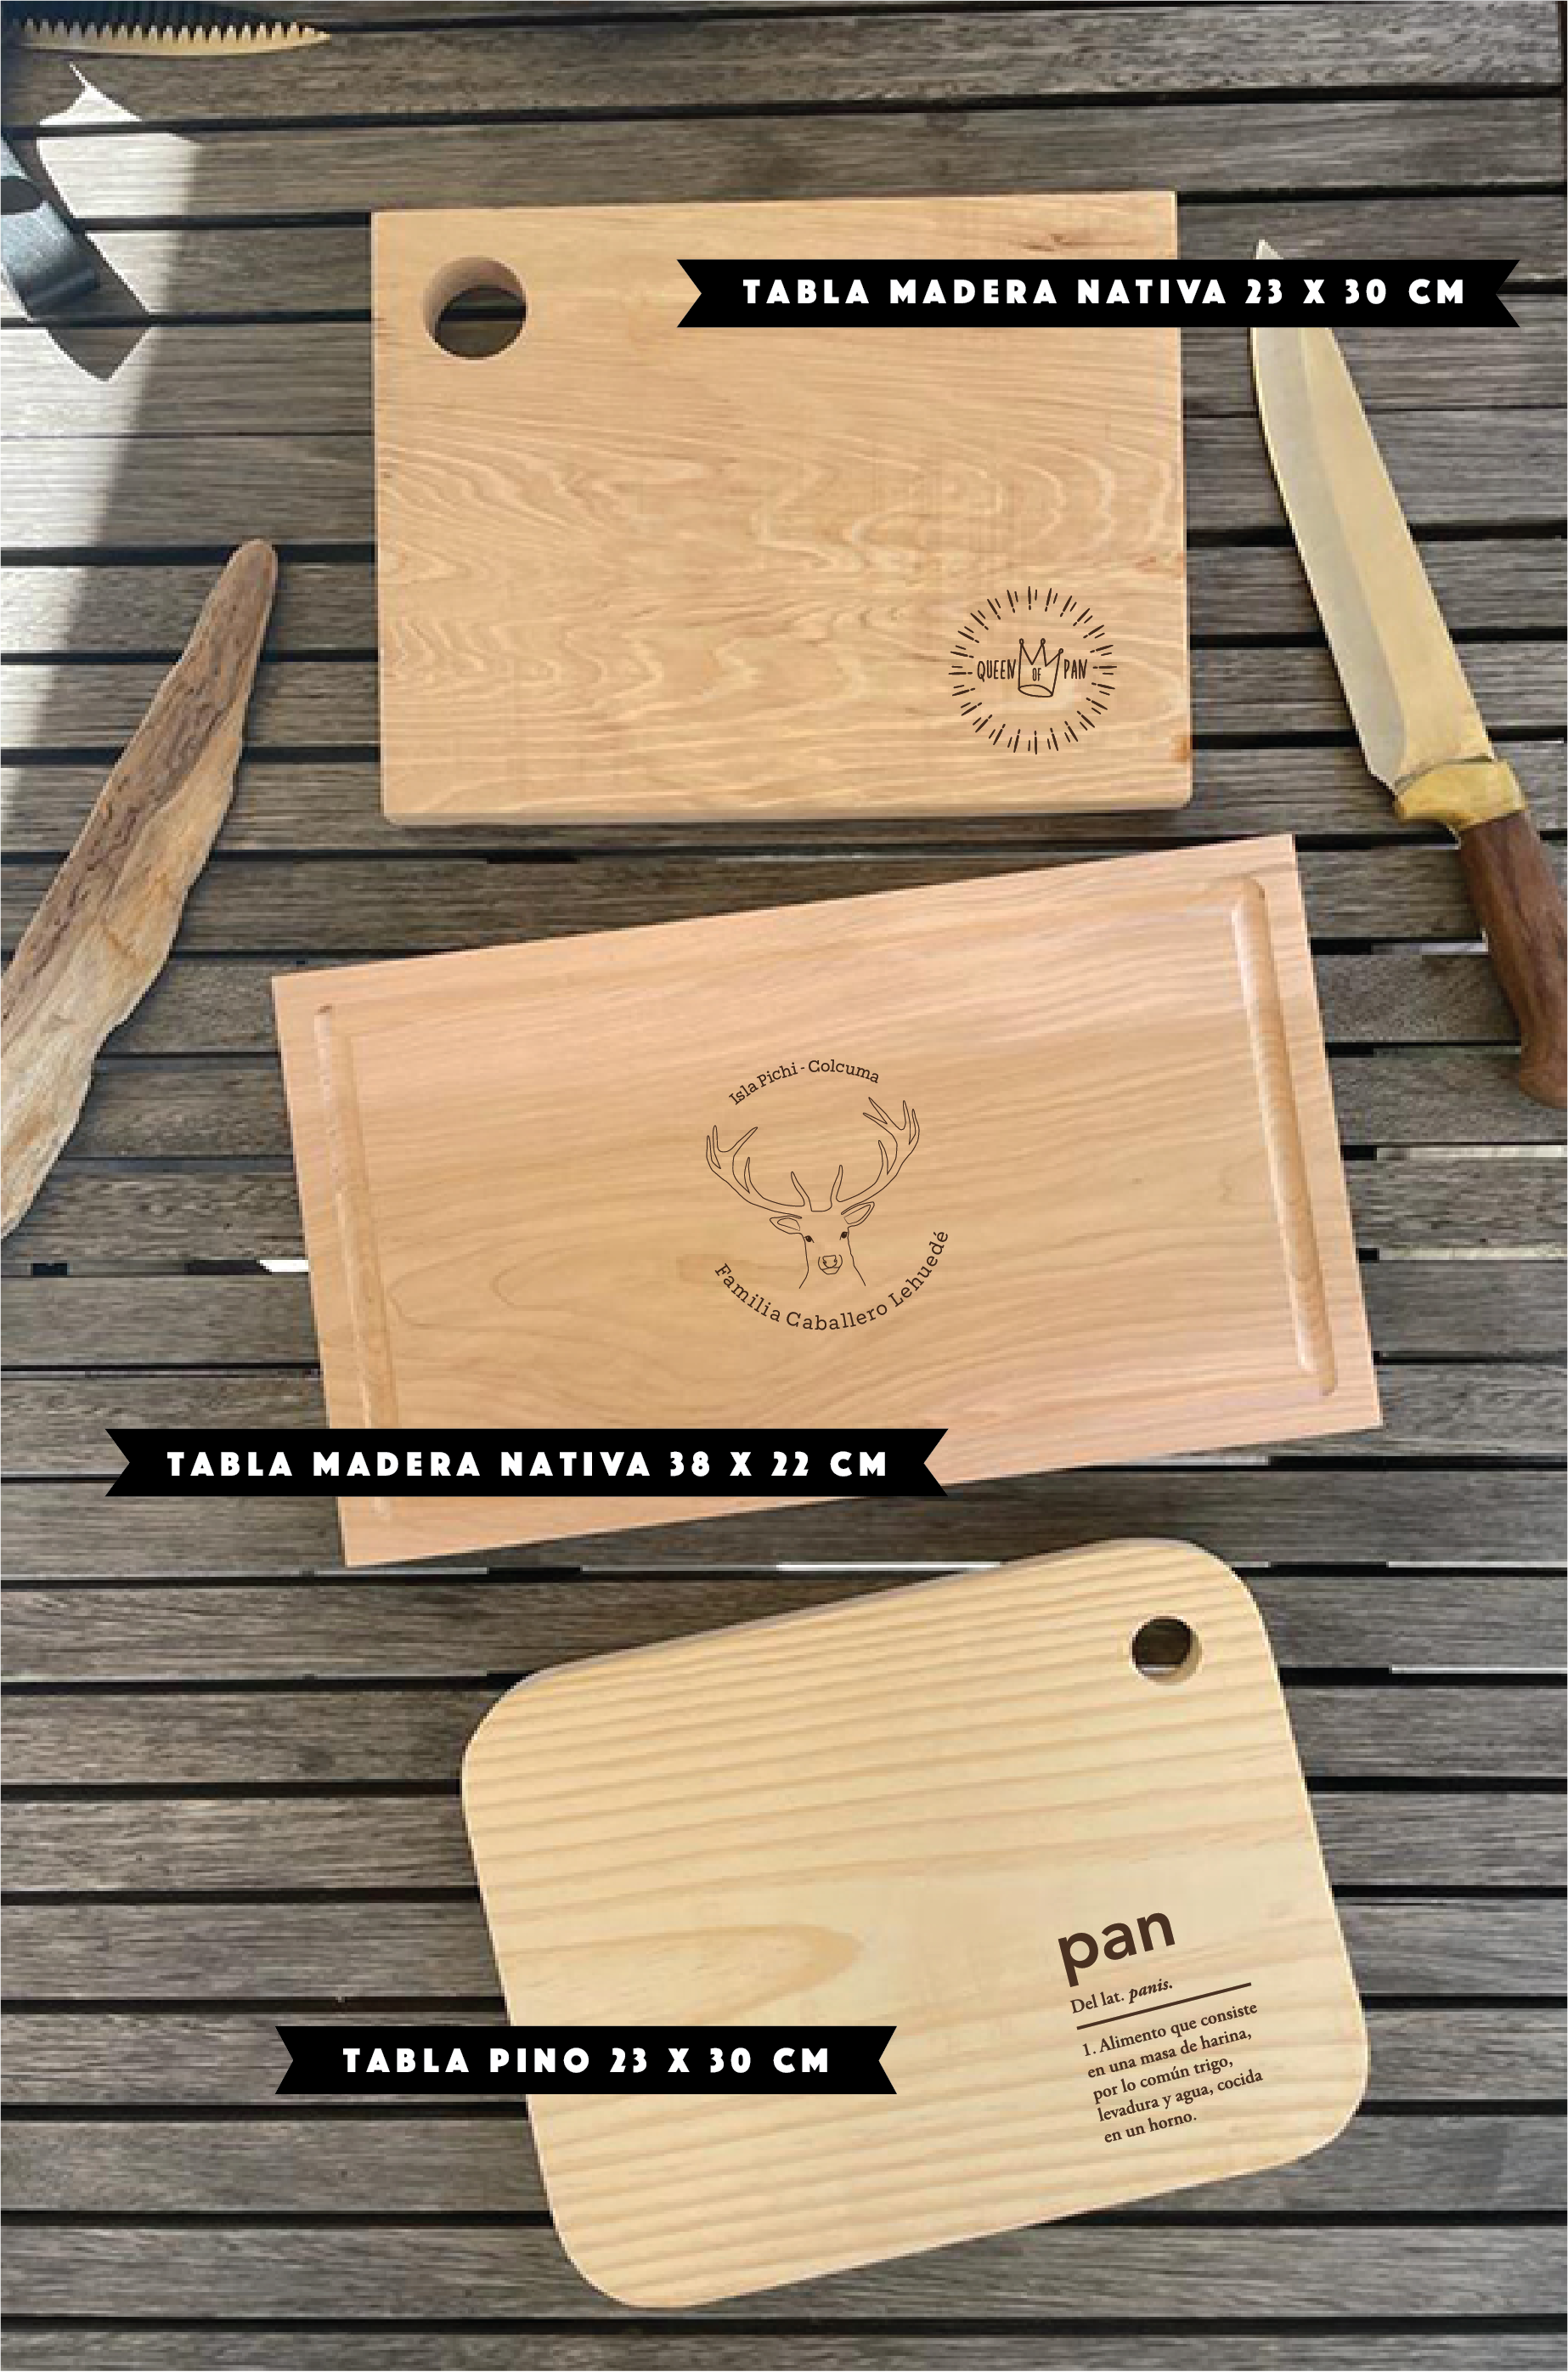 Tabla de madera de pino para cortar pan